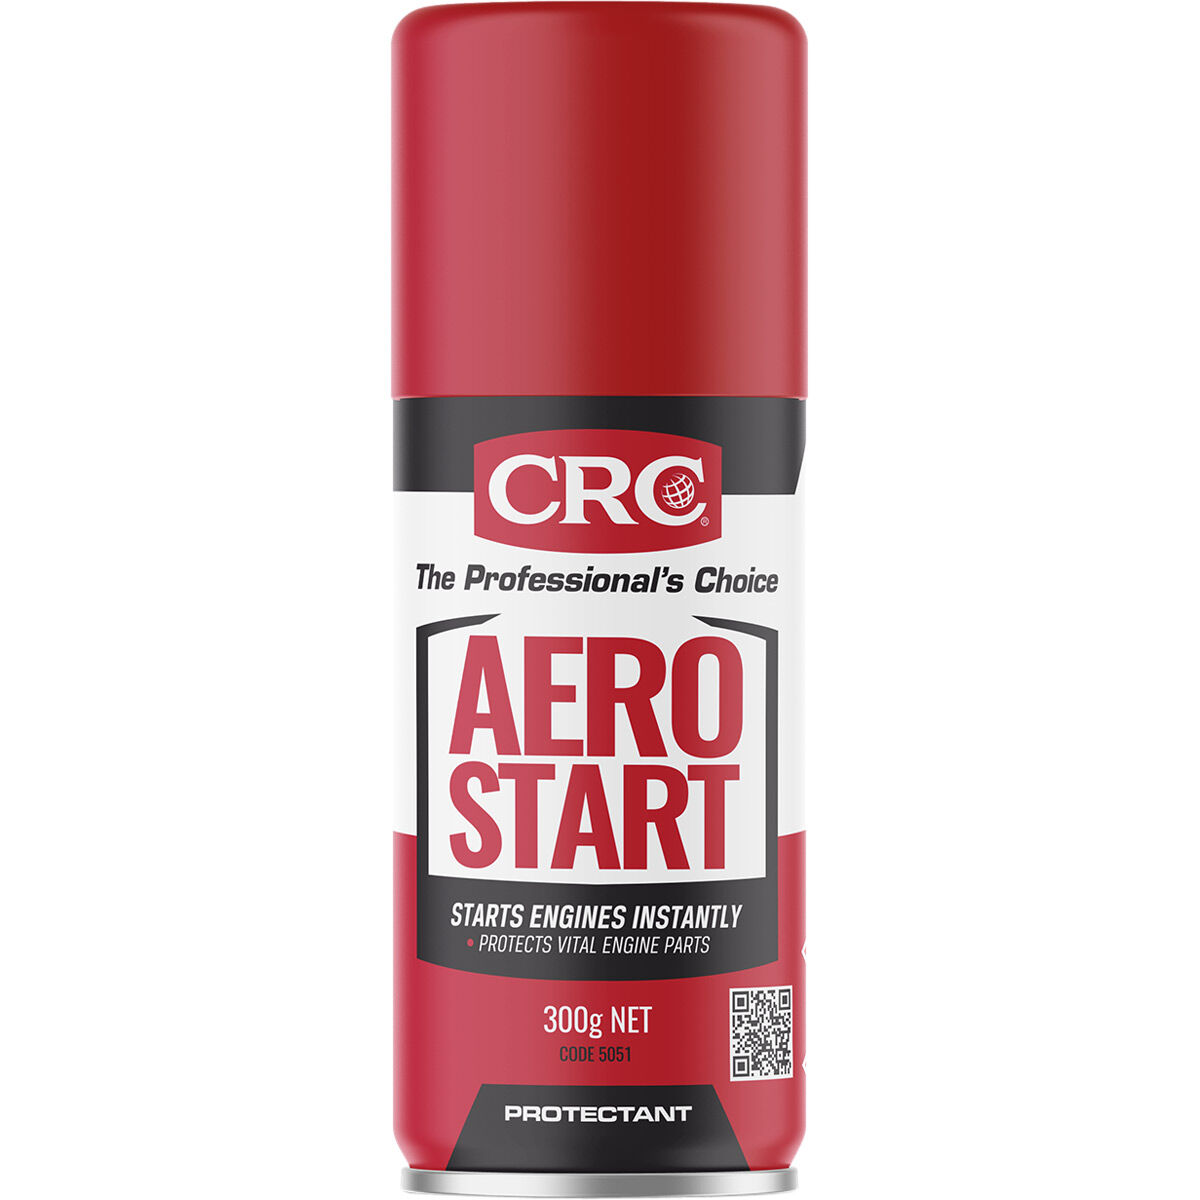 CRC Aerostart 300g, , scaau_hi-res